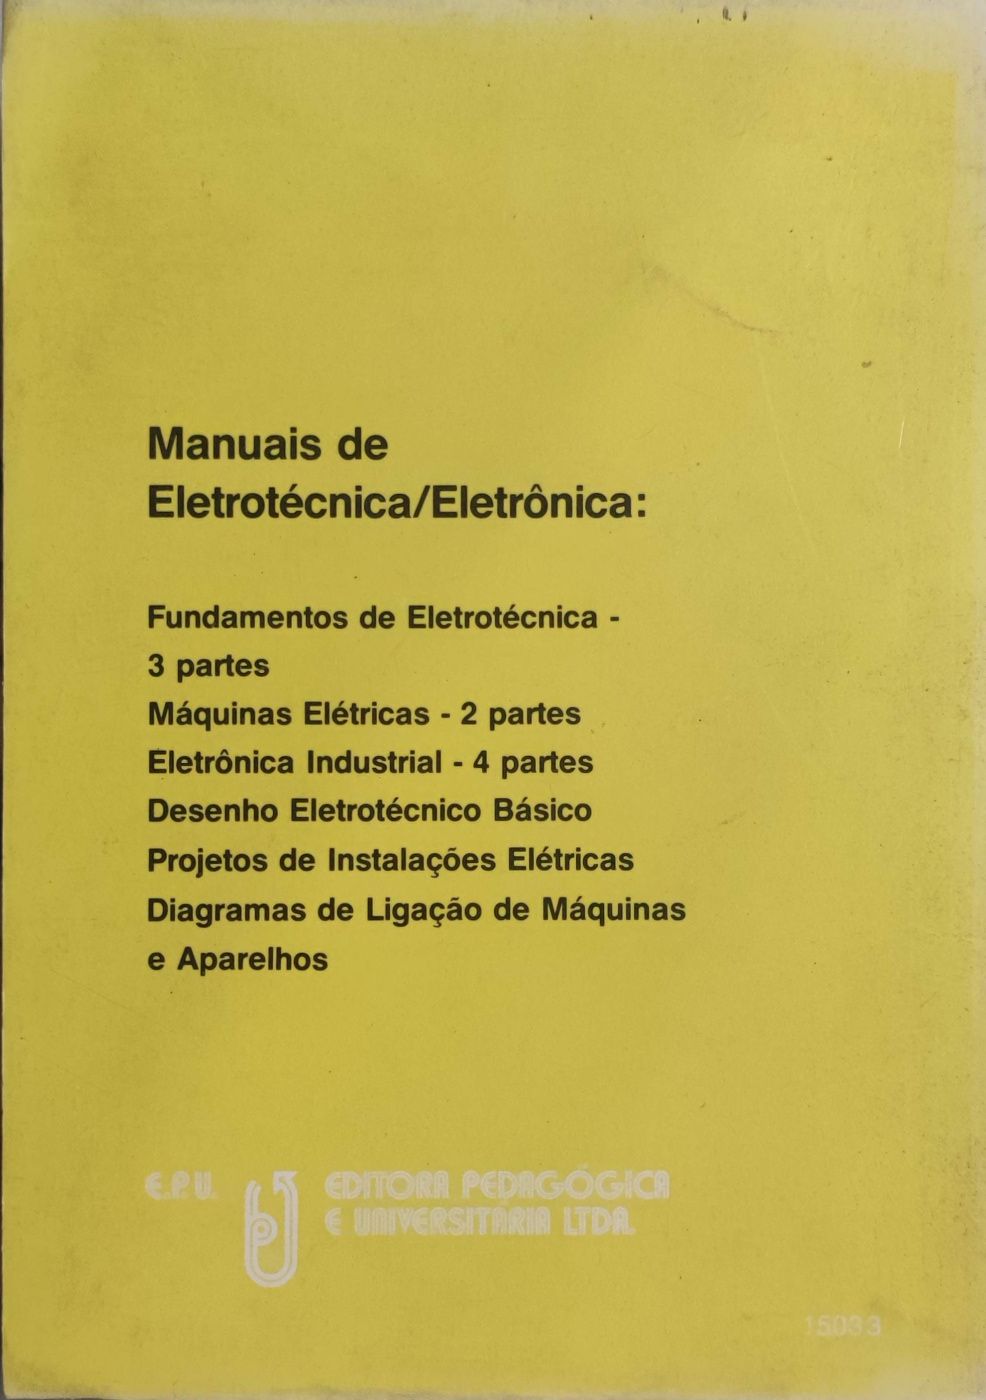 Livro- Ref CxC  - Arnold/Brandt - Eletrônica Industrial